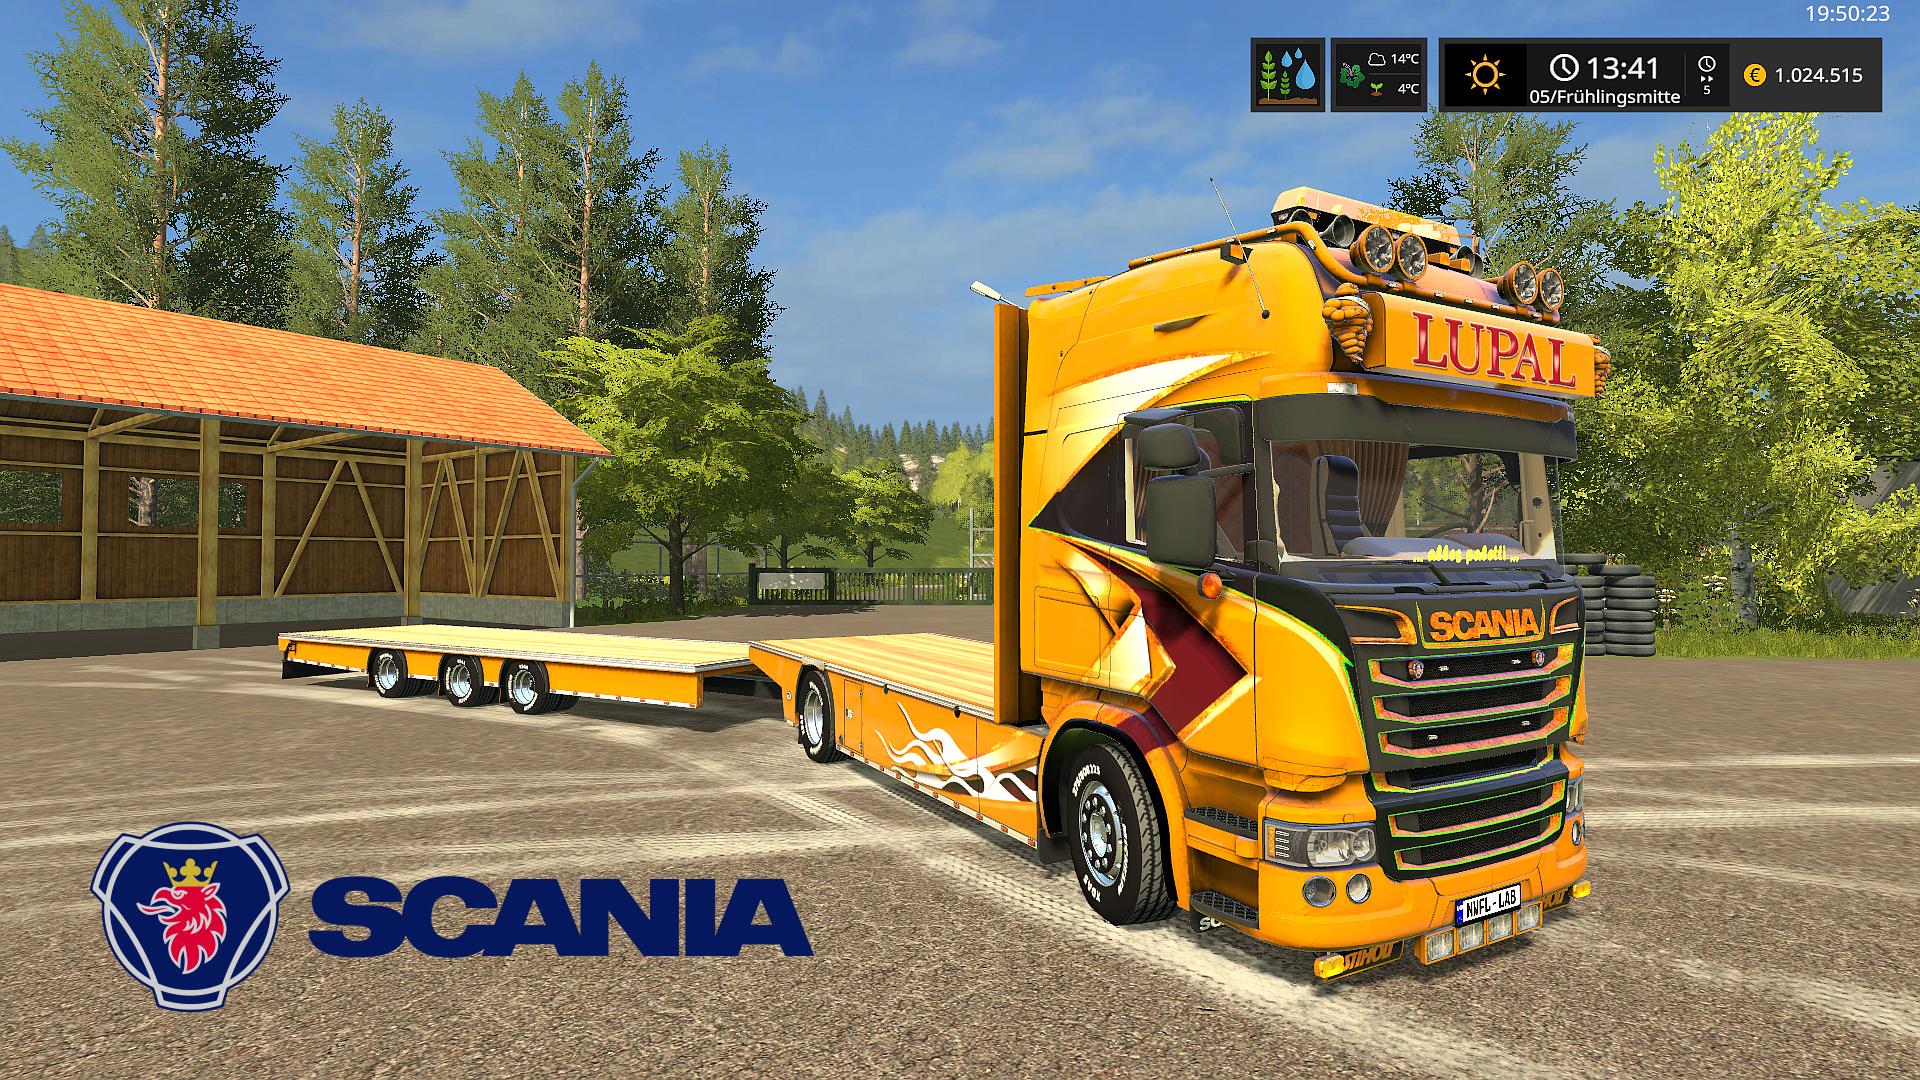 FS17 - Scania Lupal V1.0.0.2